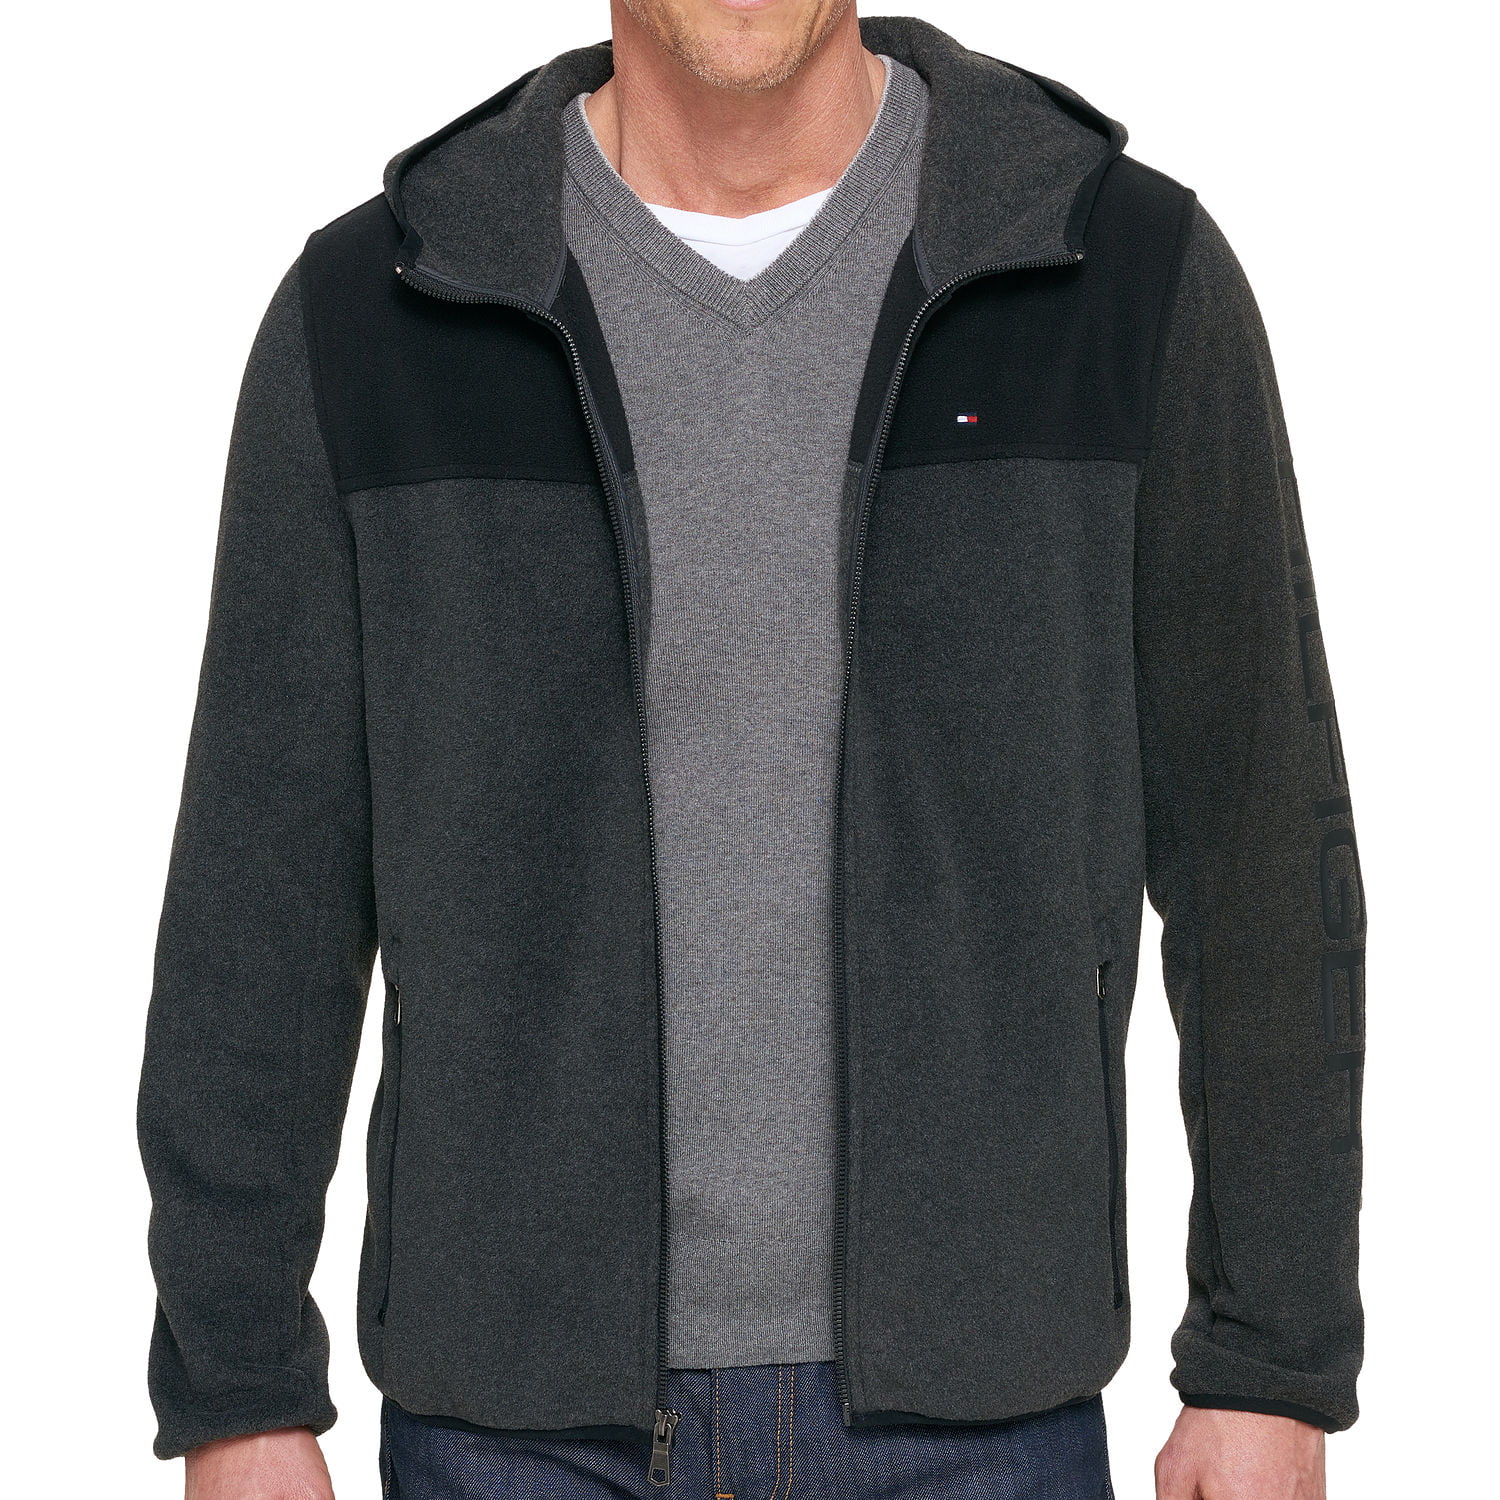 Tommy Hilfiger Dark Full Zip Jacket (Large, Gray) - Walmart.com